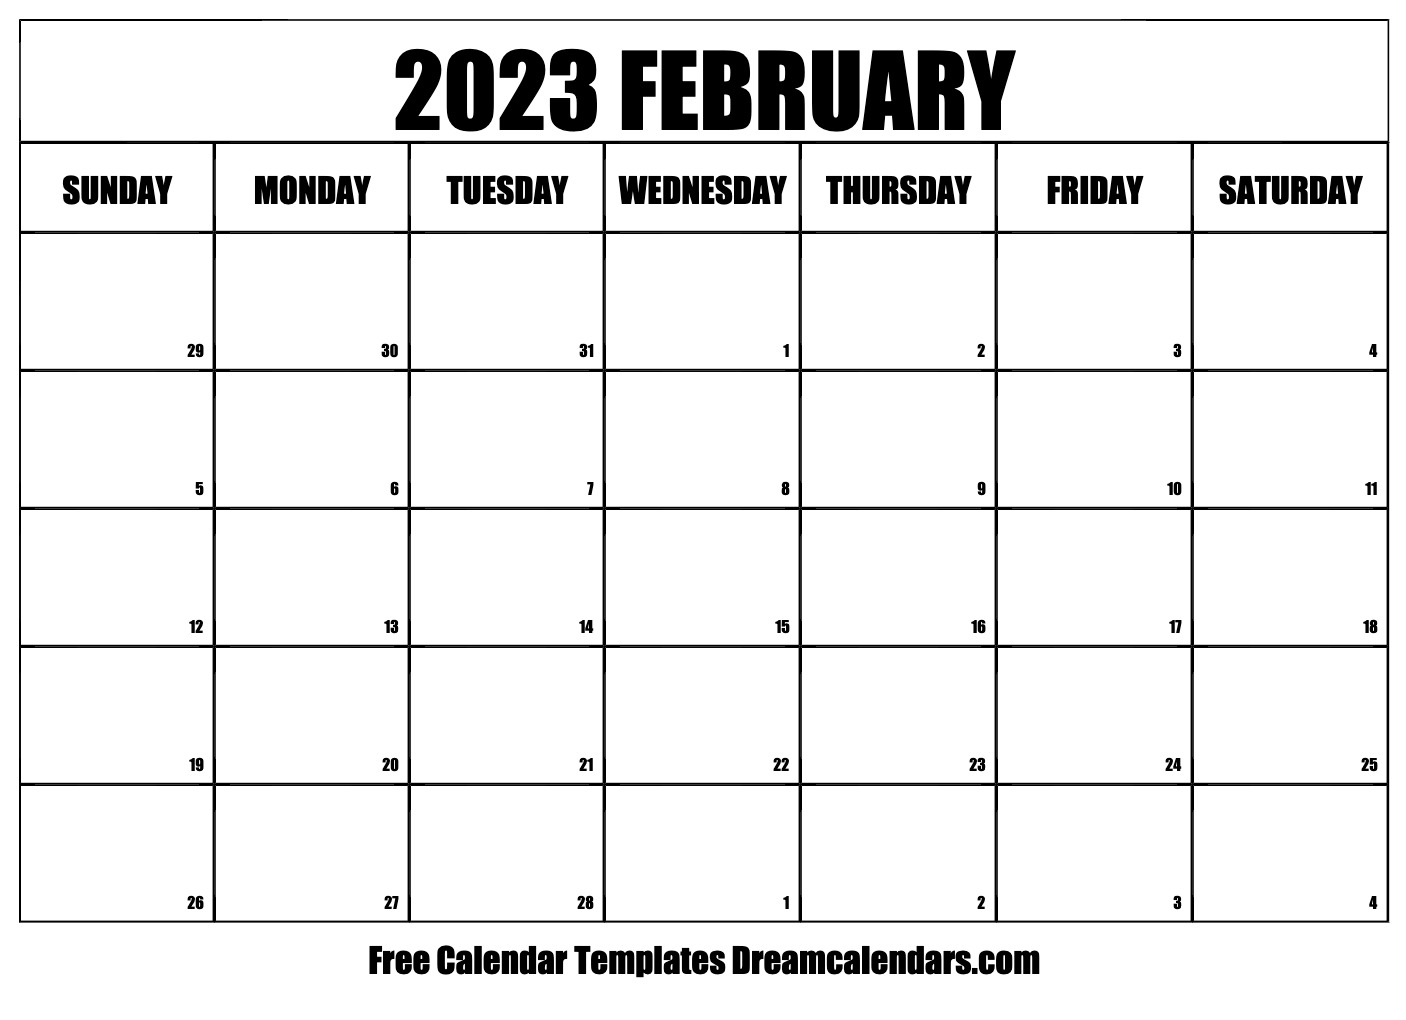 February 2023 Calendar Free Blank Printable With Holidays